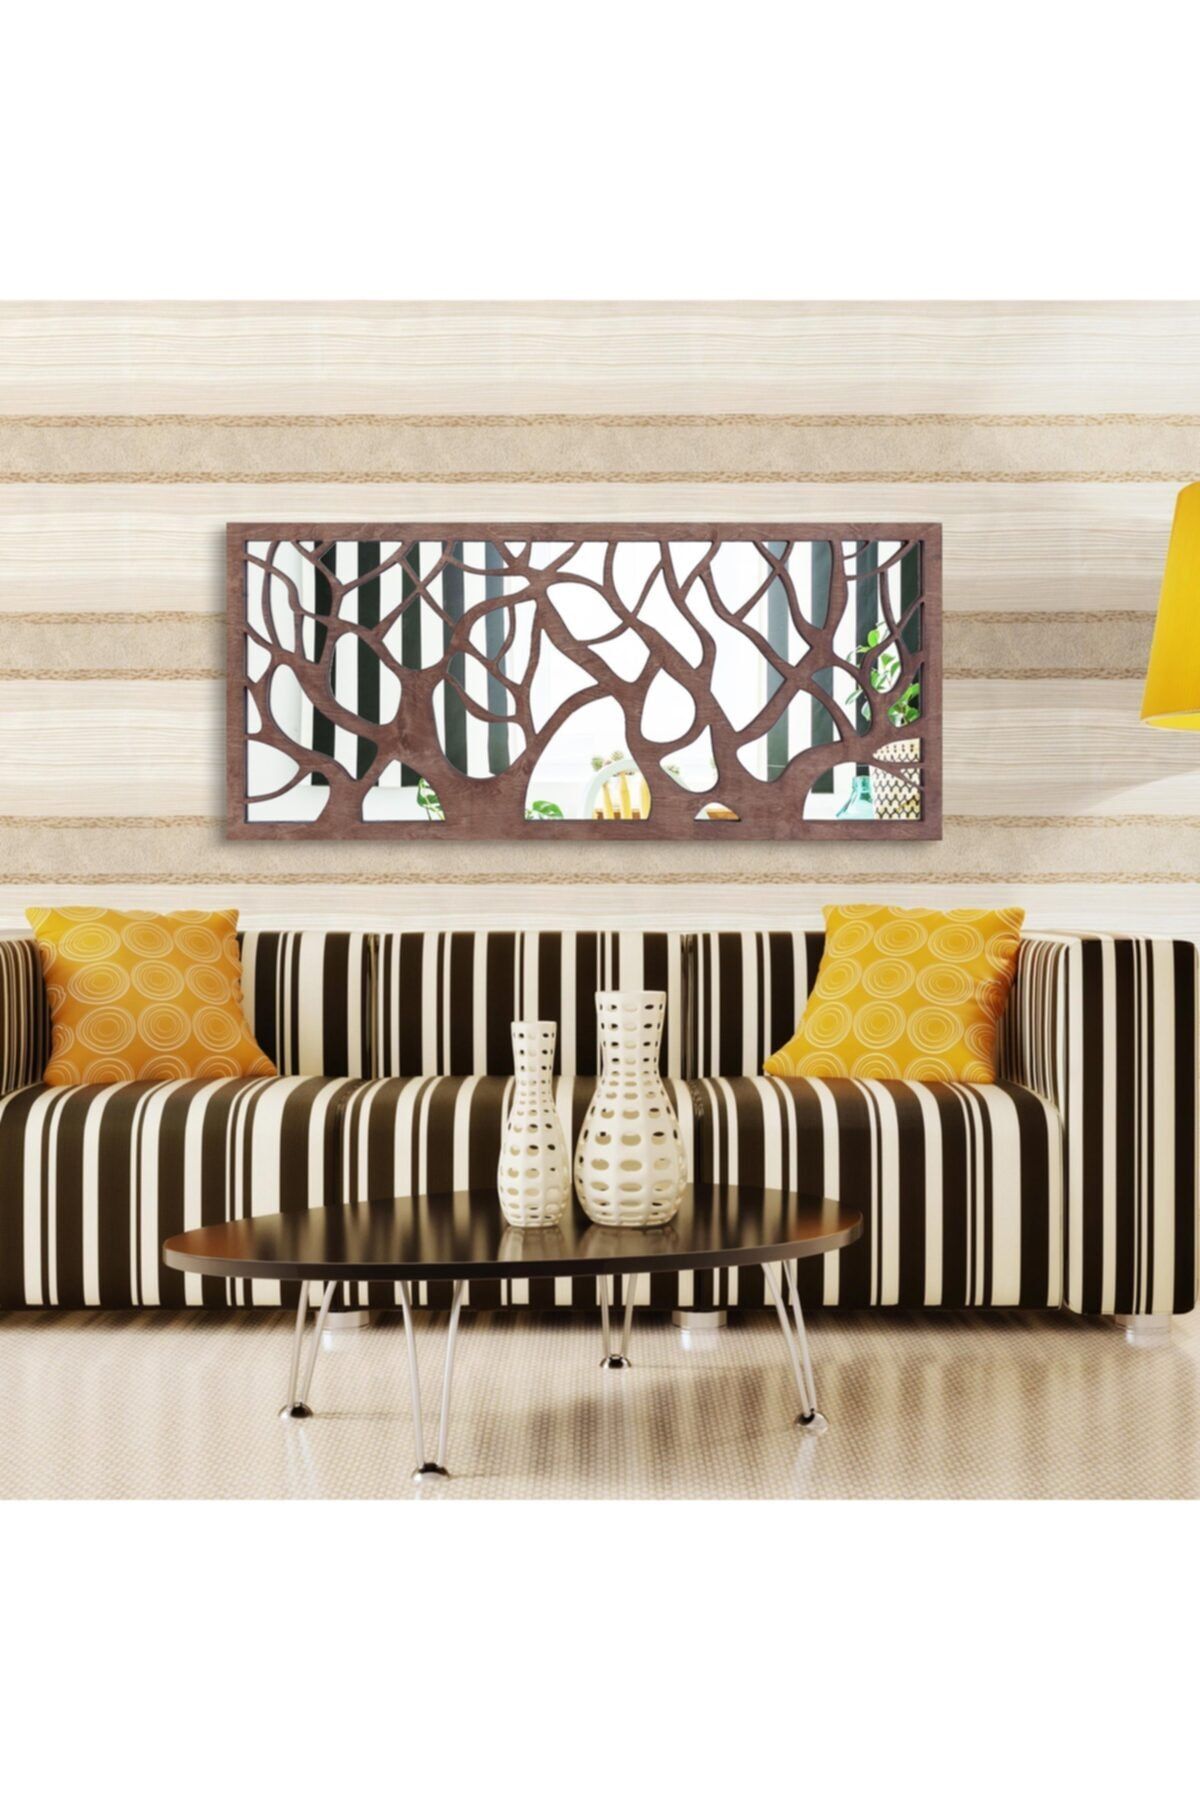 Woodboz Woodmirror - Twin Trees Iı (yatay)